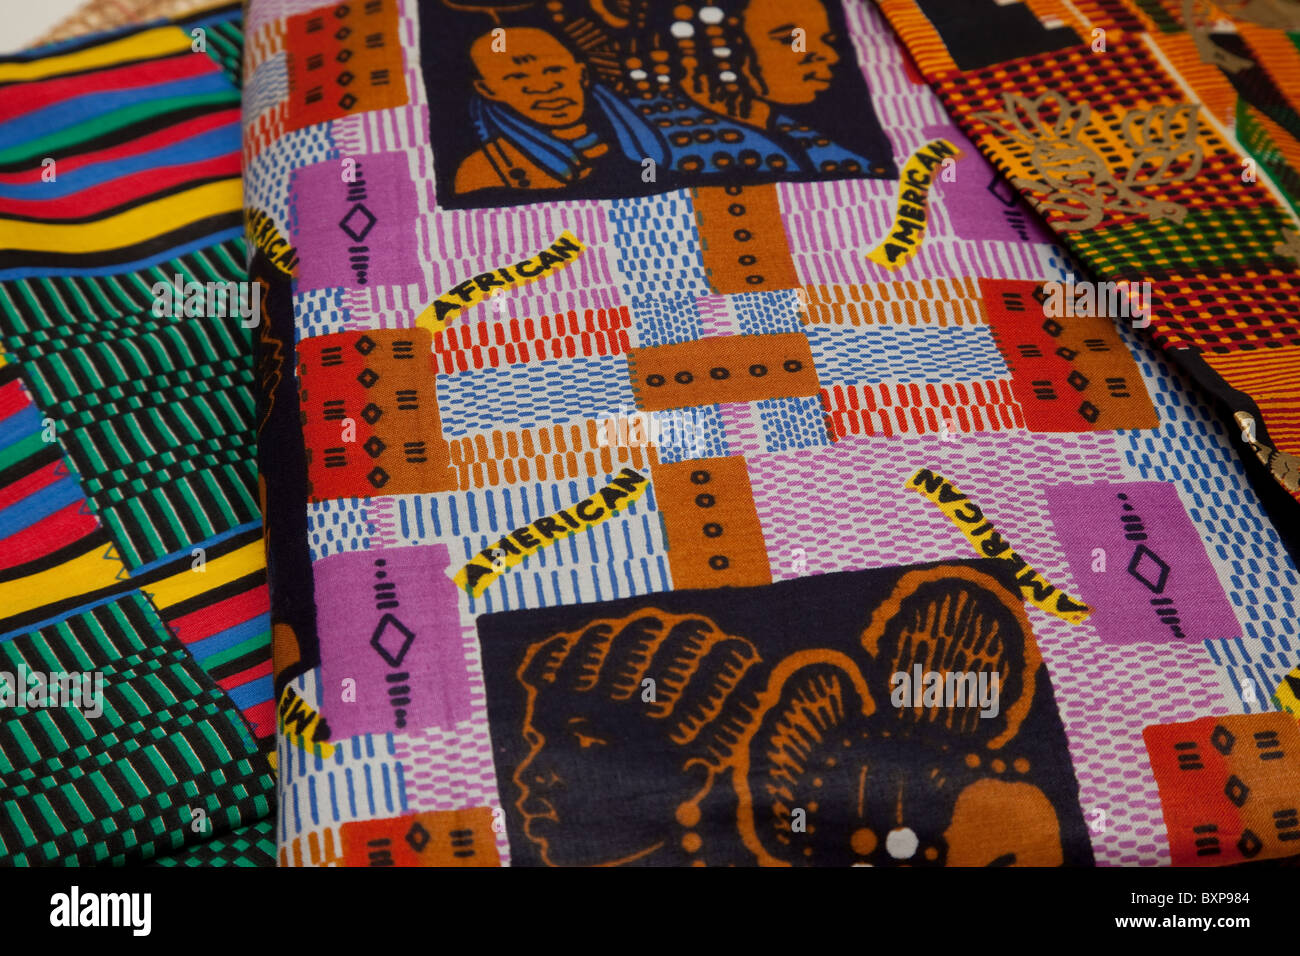 Bunten Stoff gedruckt mit den Worten Afroamerikaner, neben Stoffe aus Afrika Stockfoto